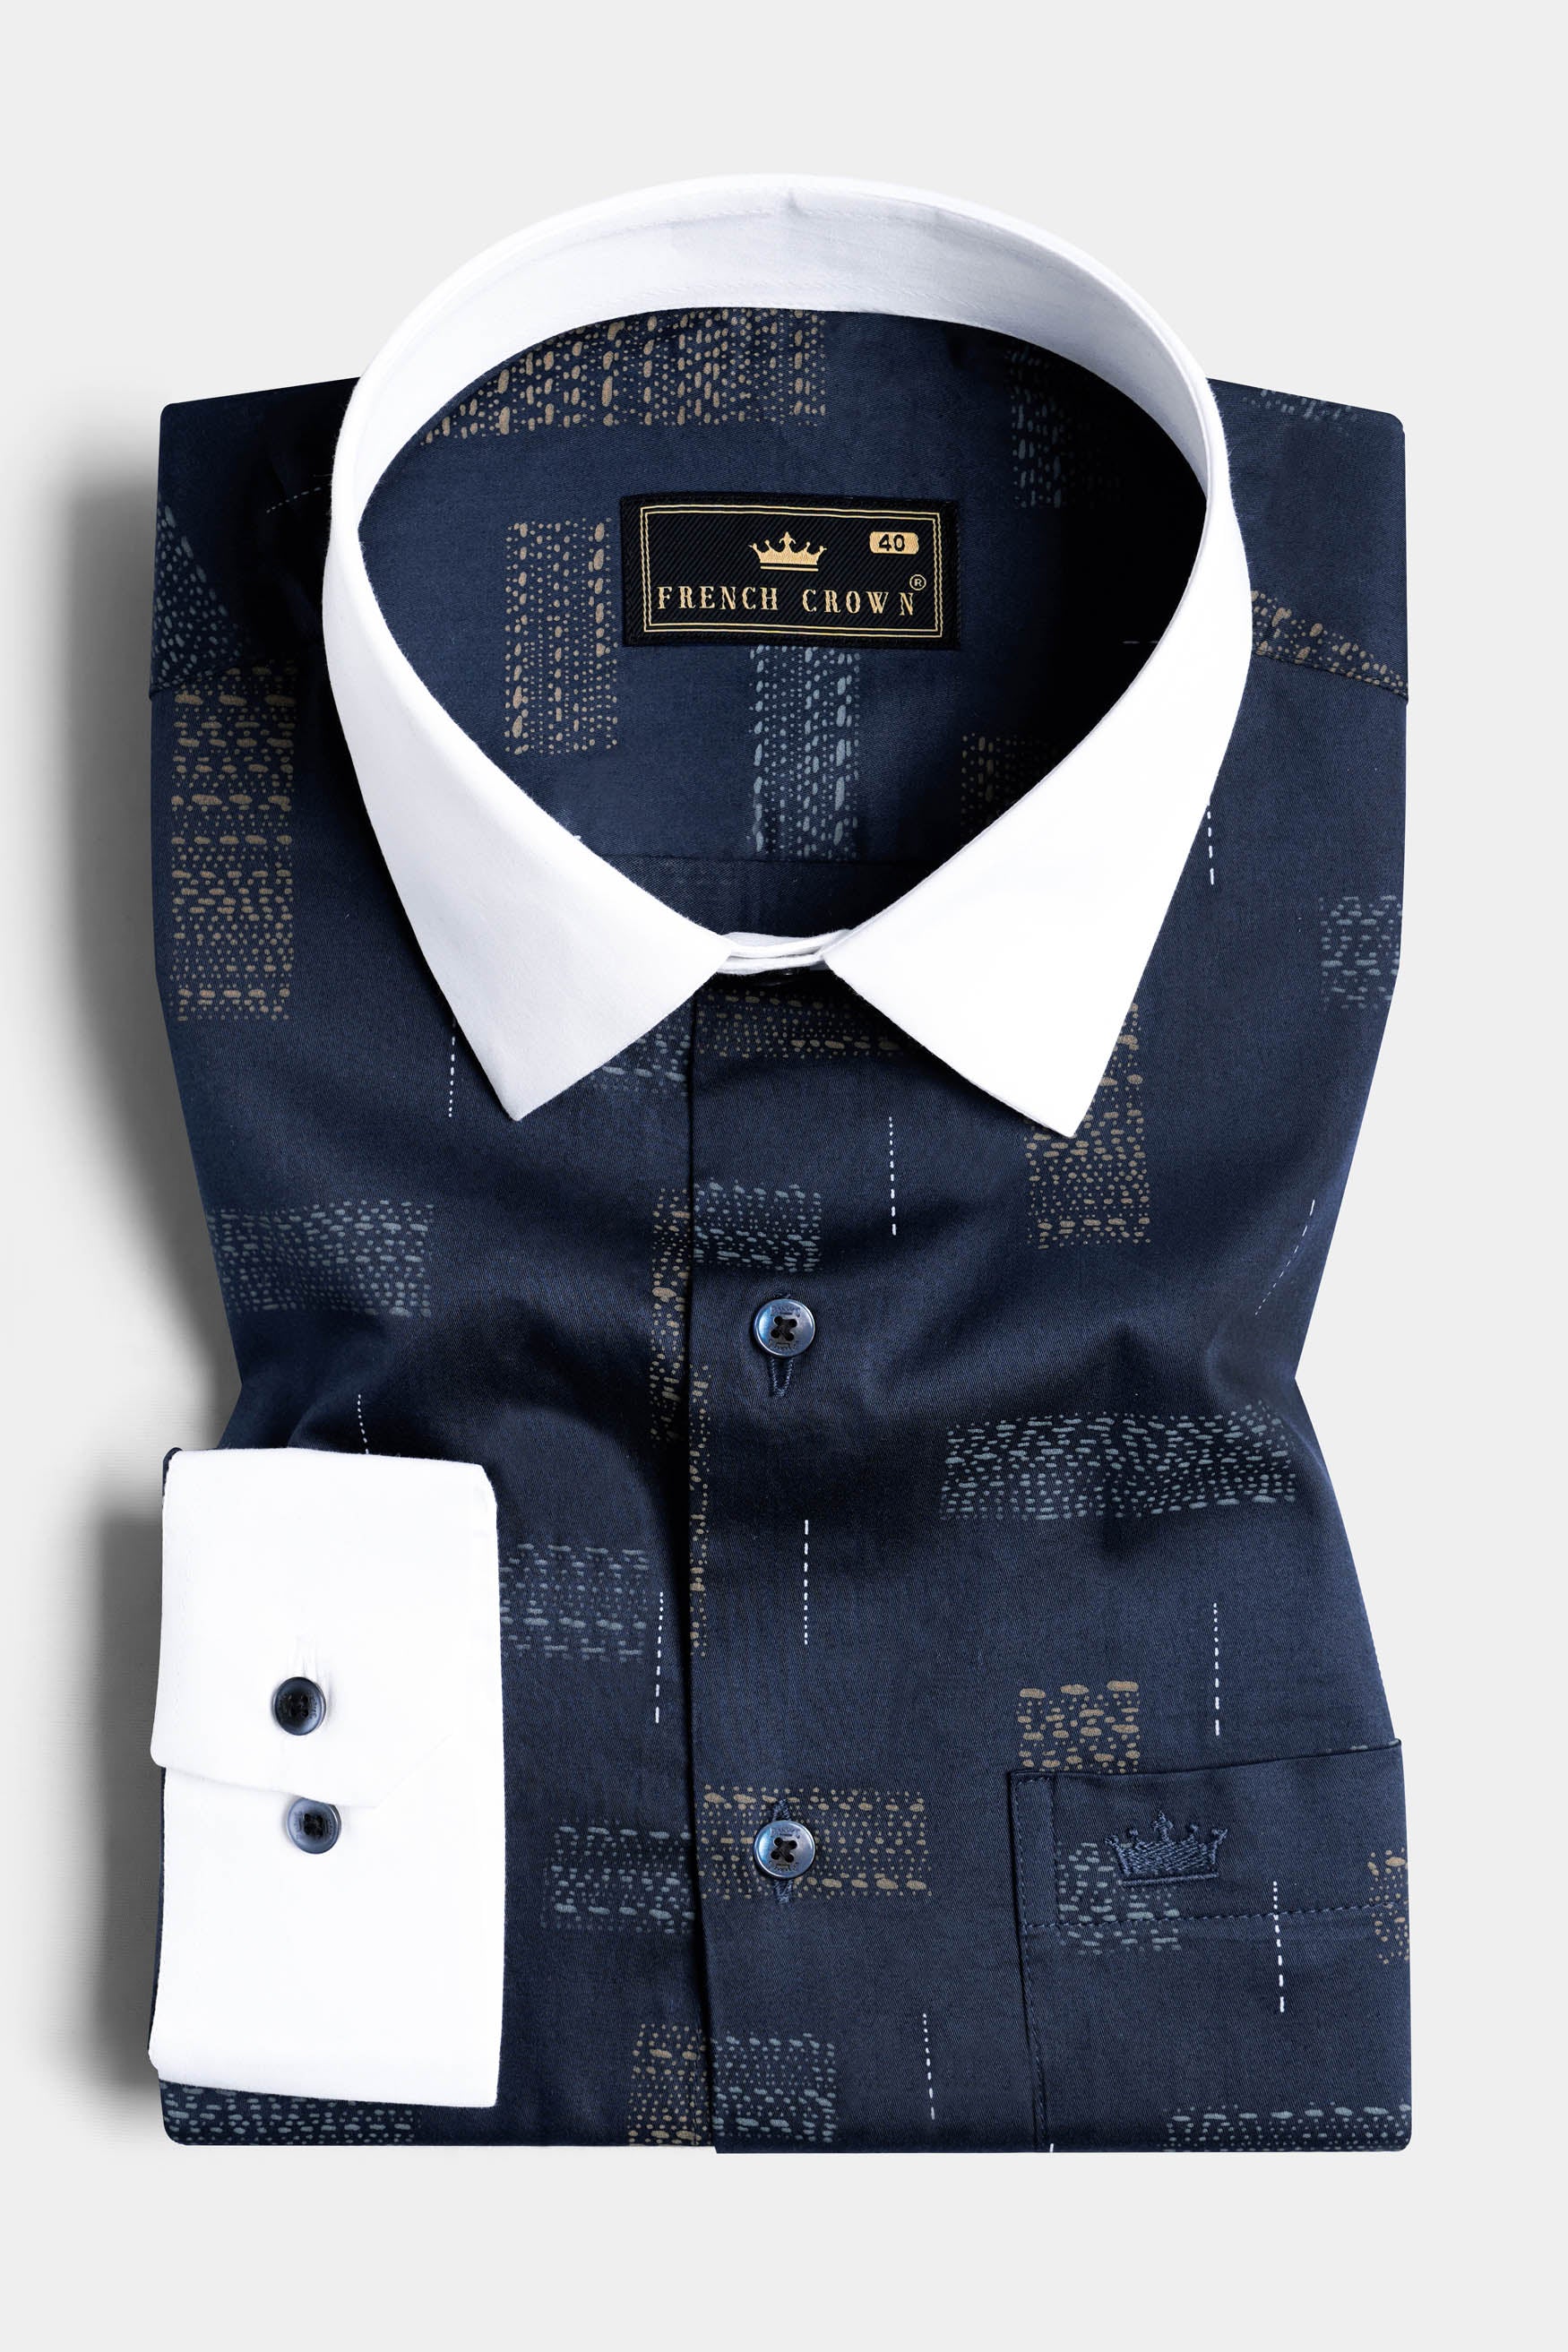 Mirage Navy Blue Printed with White Cuffs and Collar Super Soft Premium Cotton Shirt